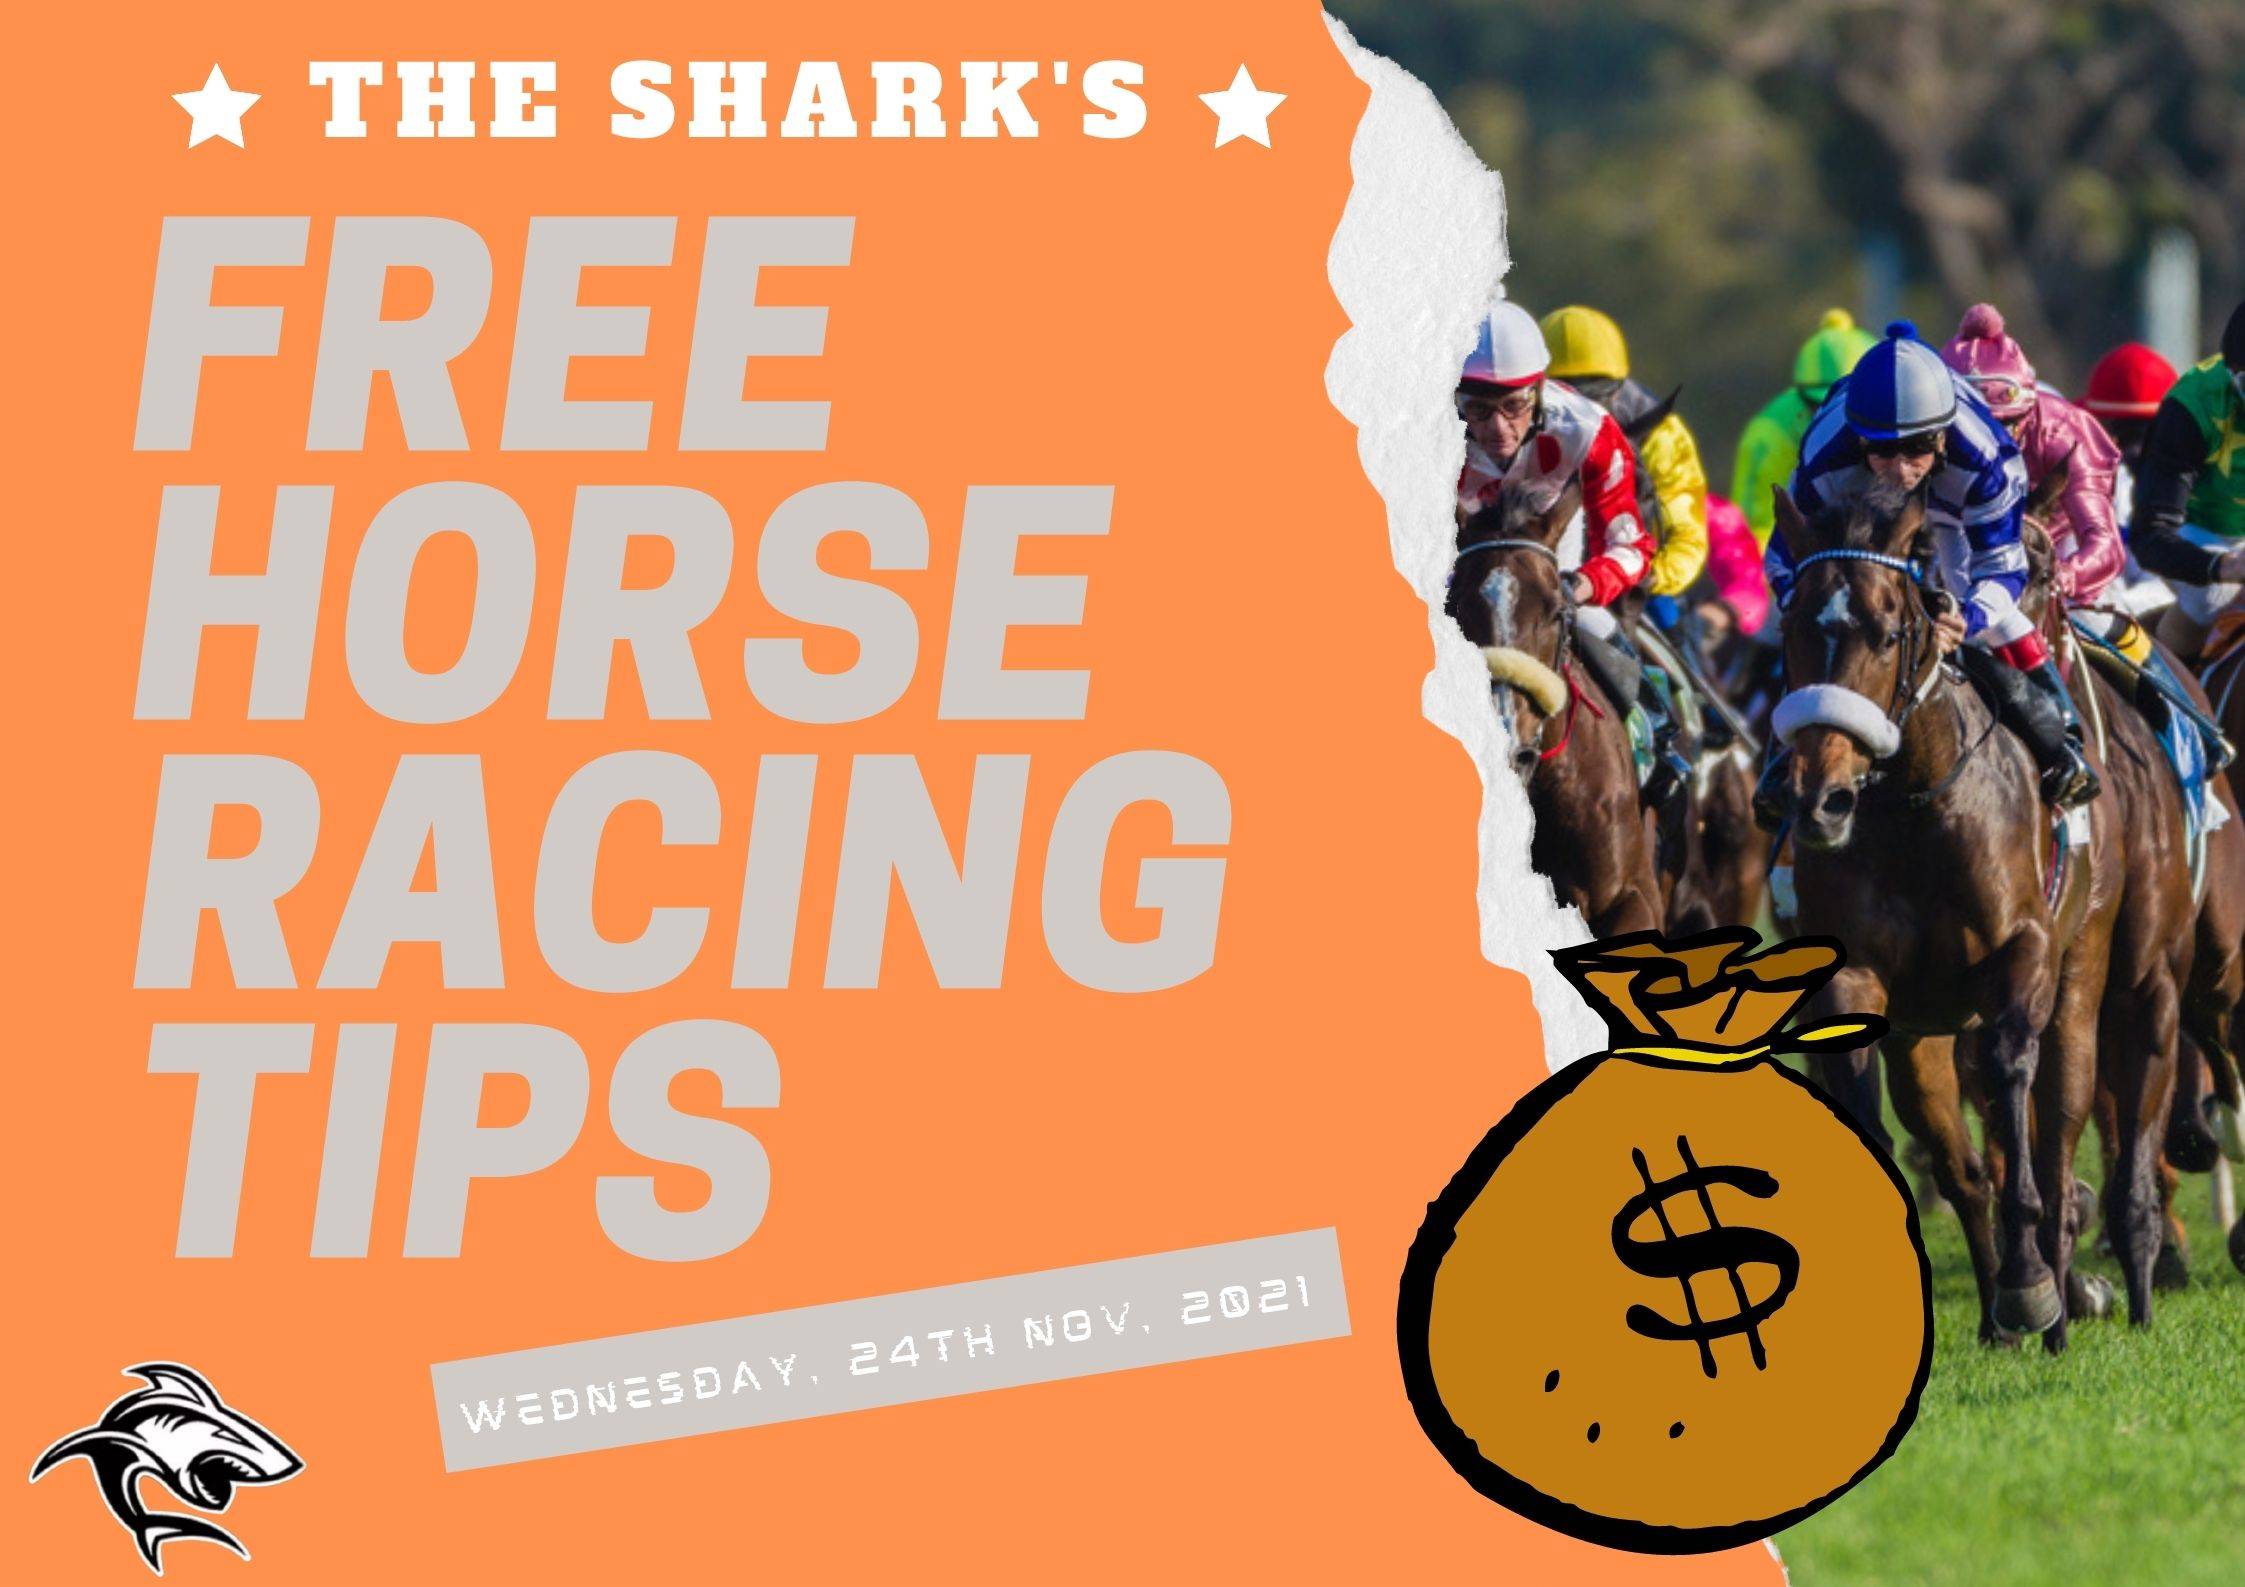 Free Horse Racing Tips - 24th Nov